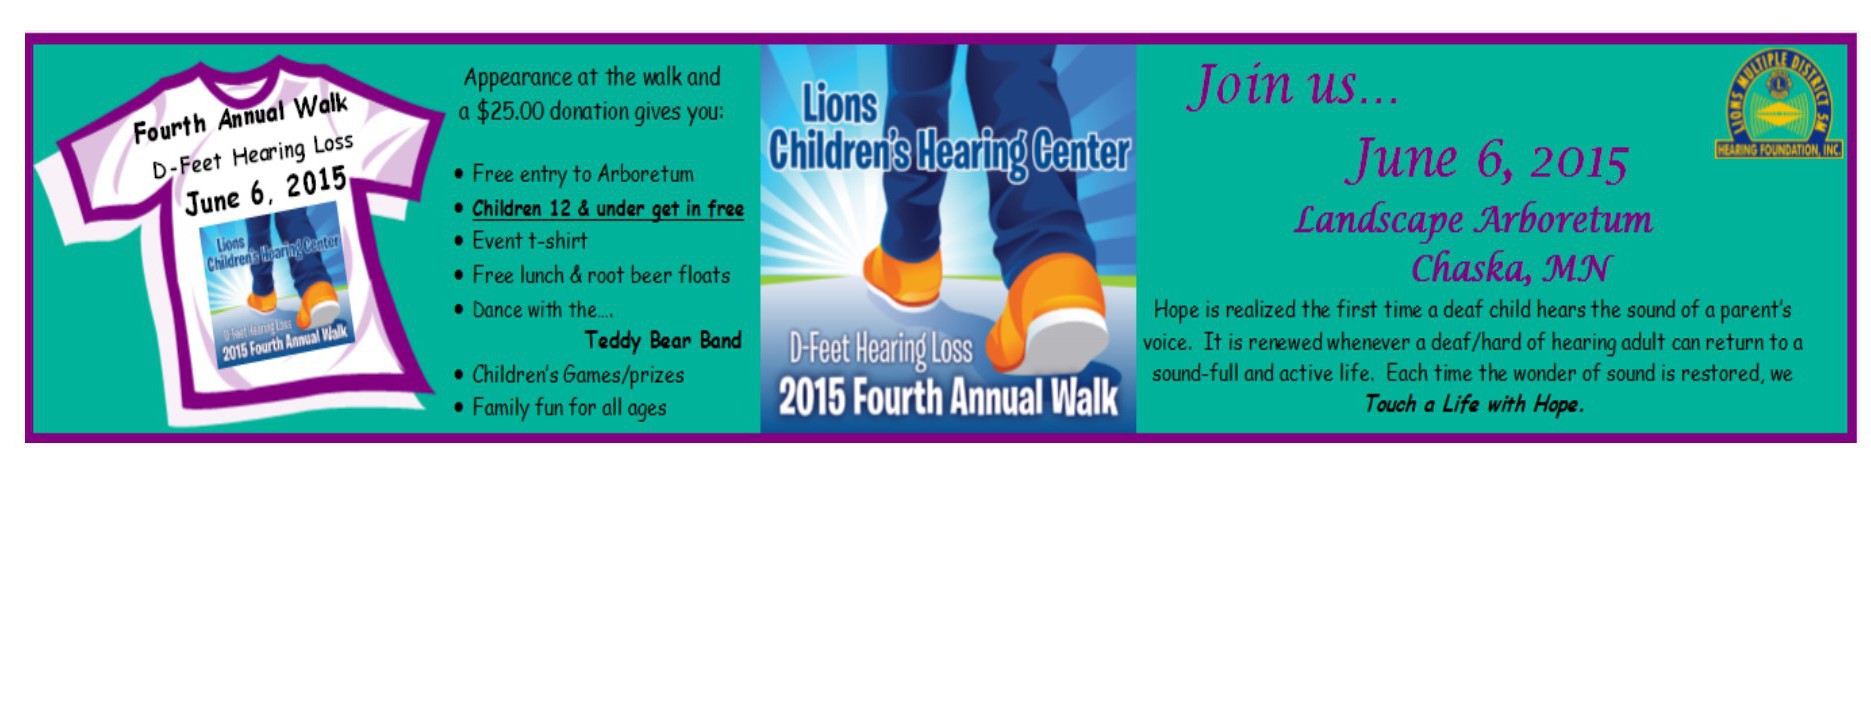 D-Feet Hearing Loss Walk 2015